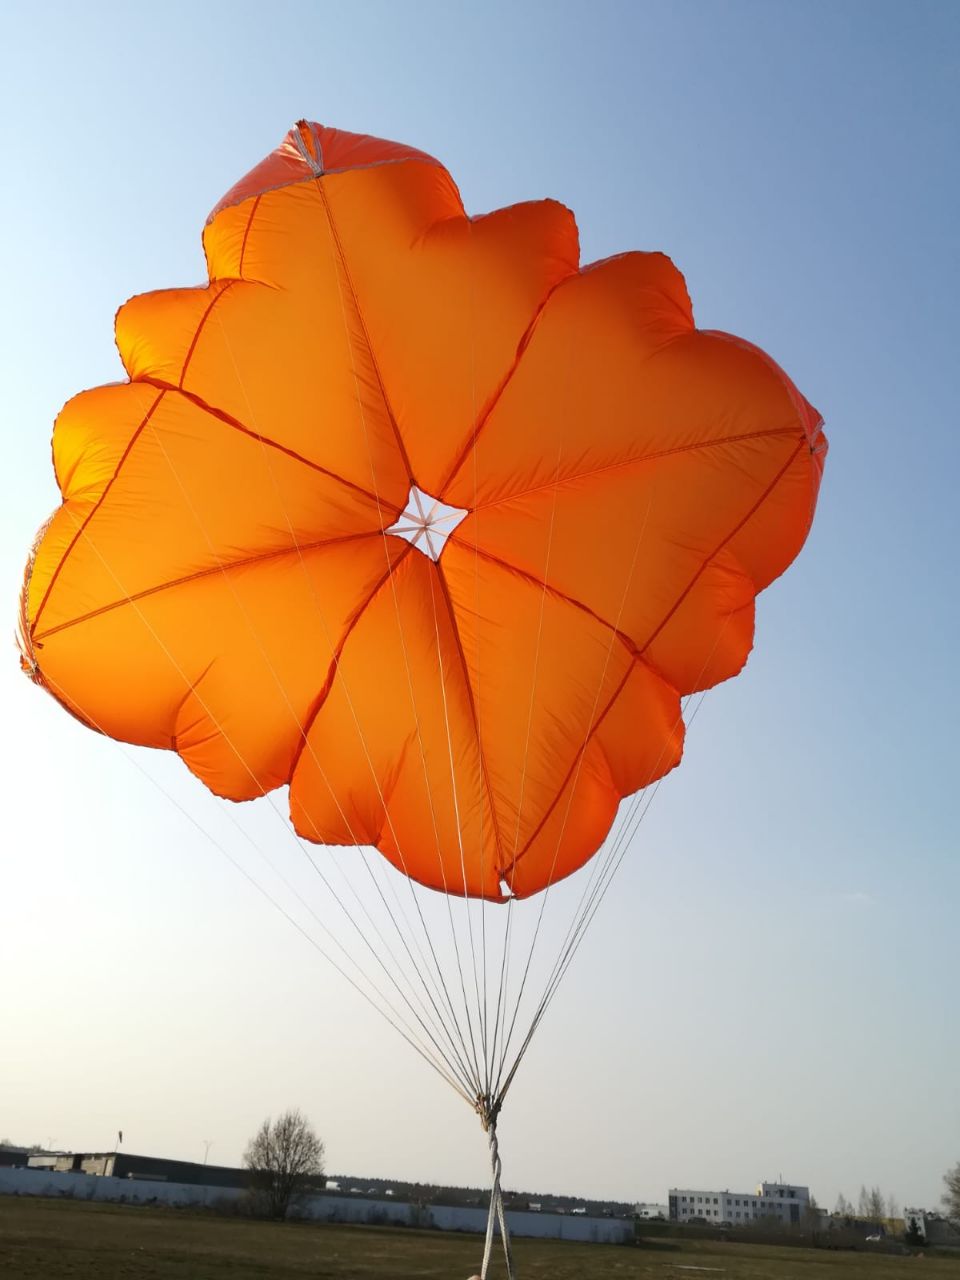 Parachute system